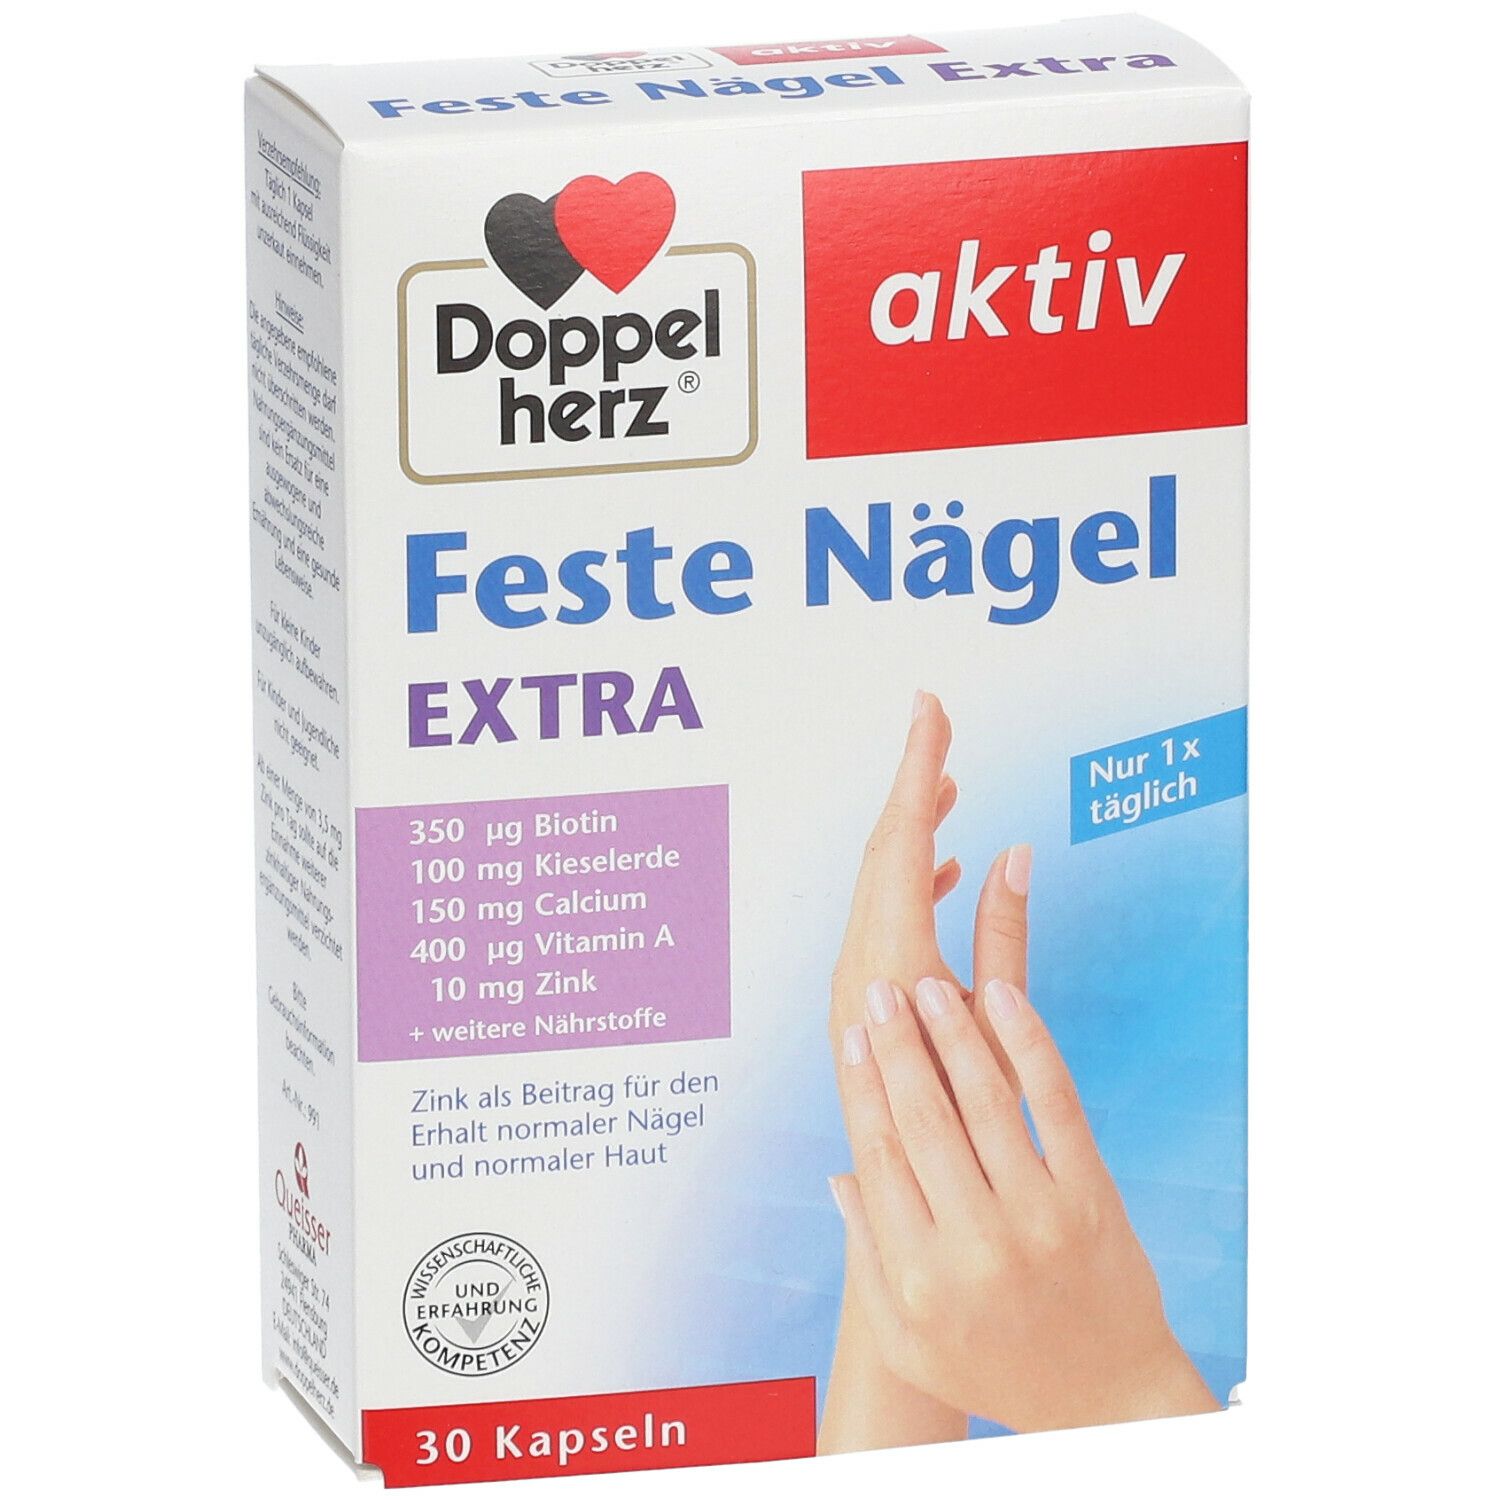 Doppelherz® aktiv Feste Nägel EXTRA shopapotheke.ch